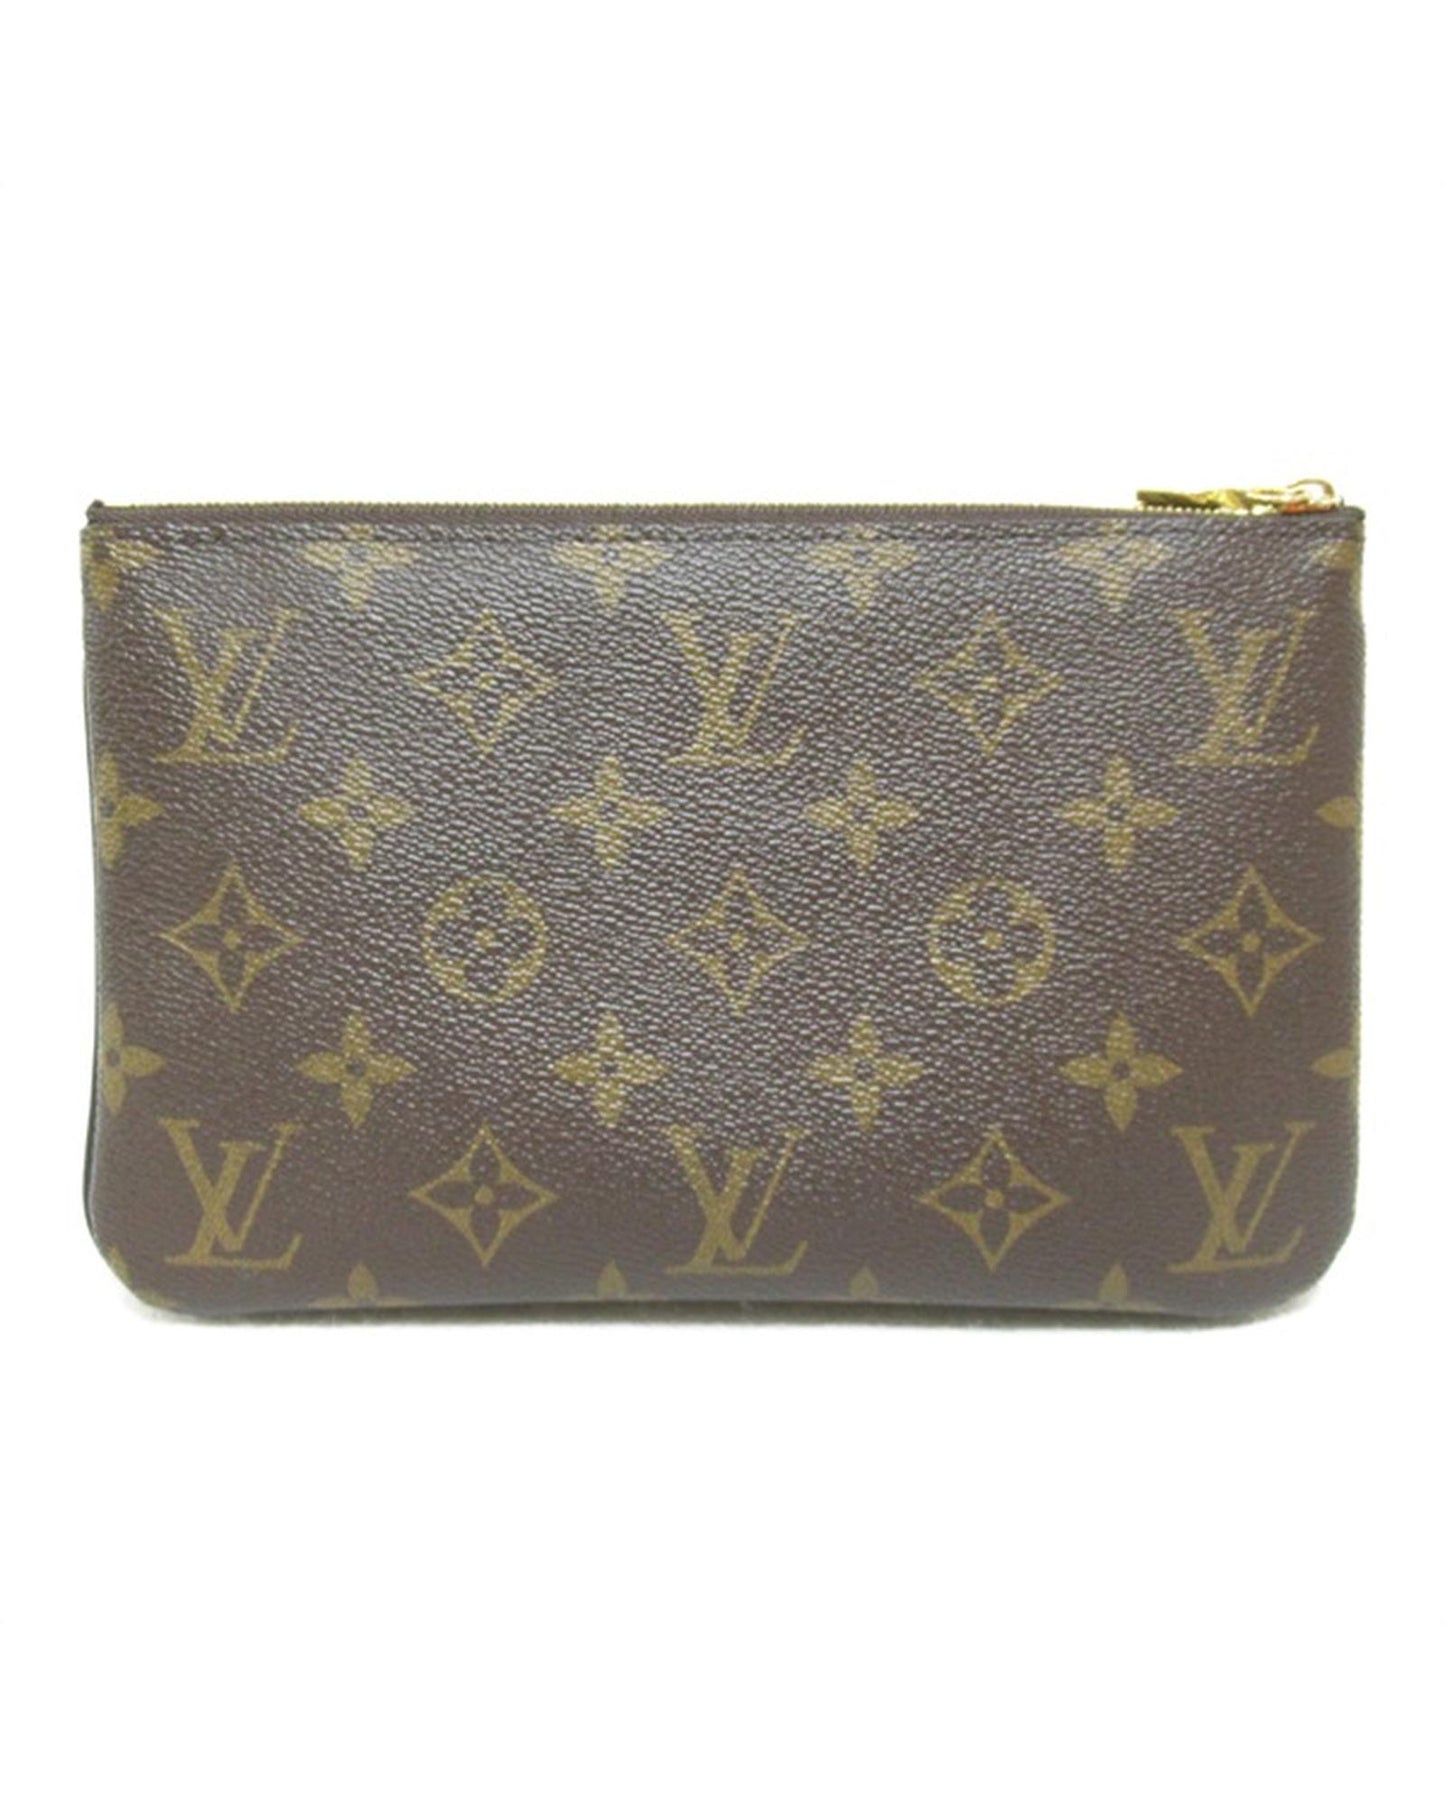 Louis Vuitton Women's Double Zip Monogram Pochette Bag in Brown